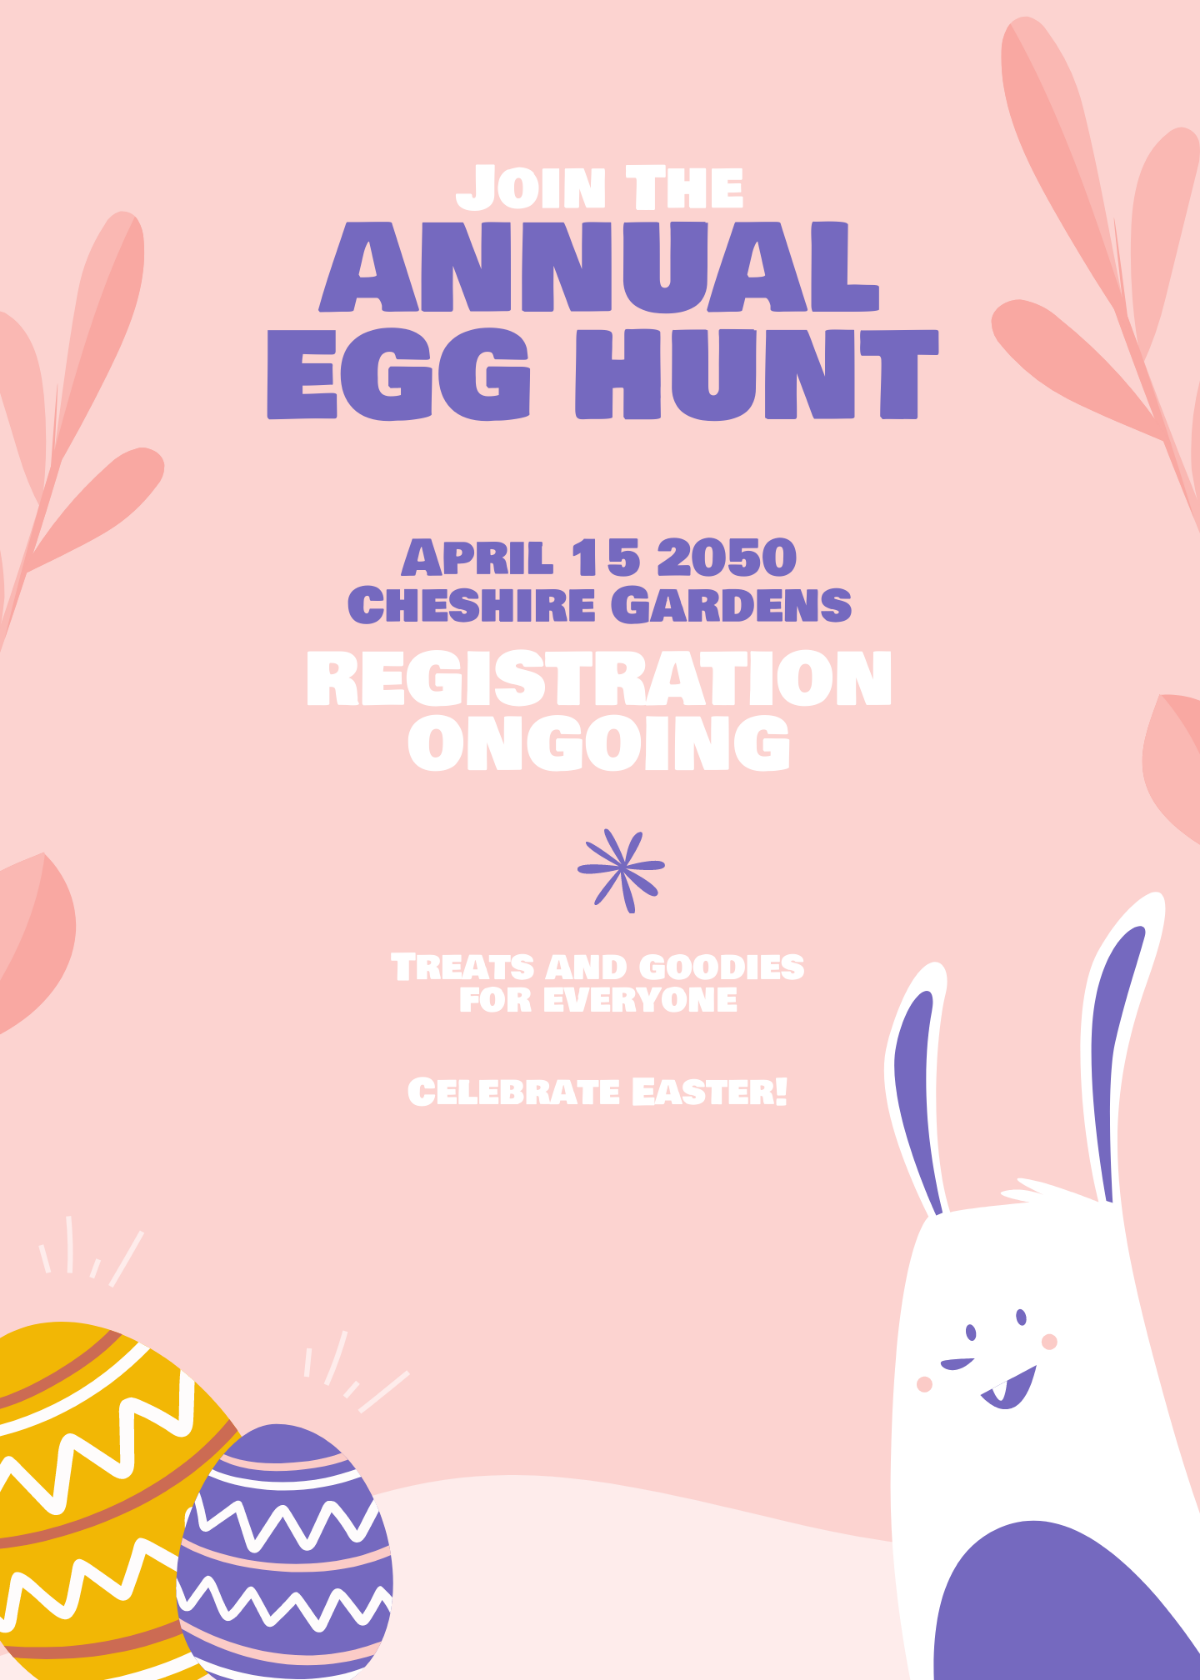 Easter Egg Hunt Invitation Template